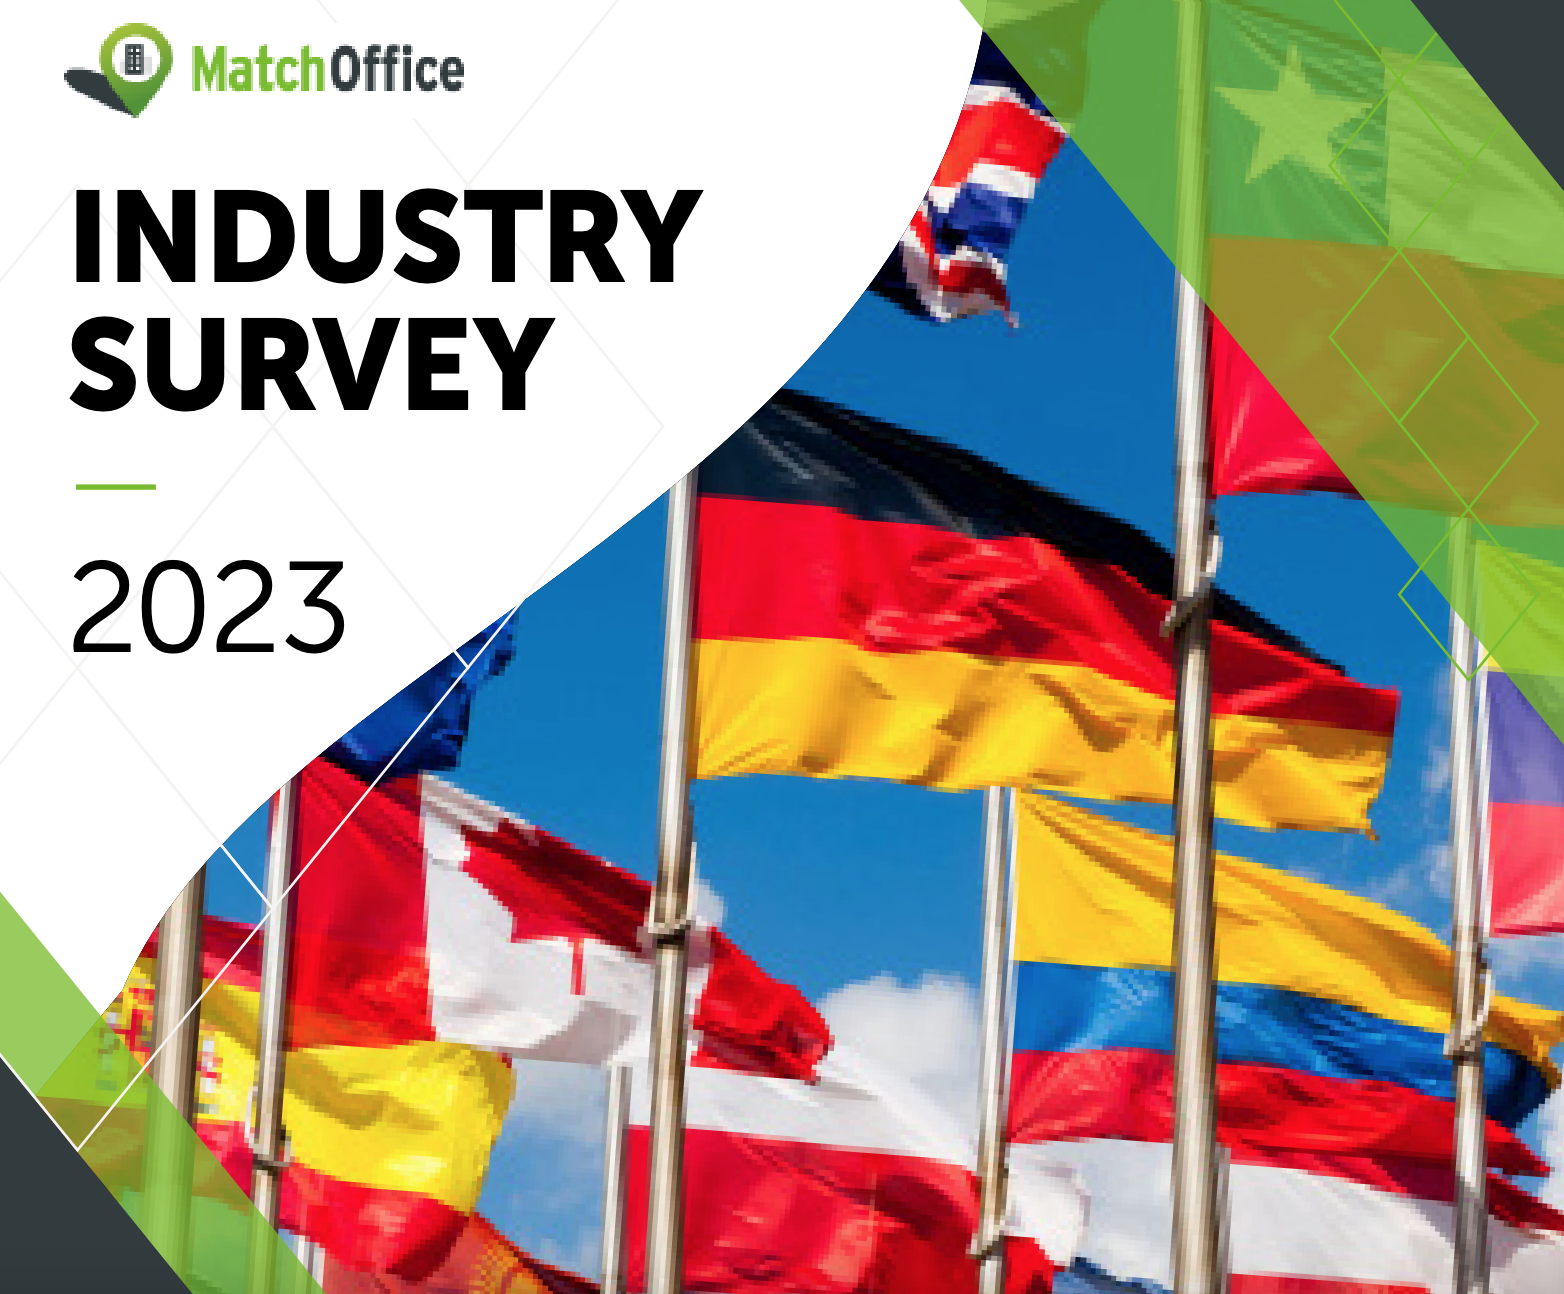 MatchOffice Industry Survey 2022